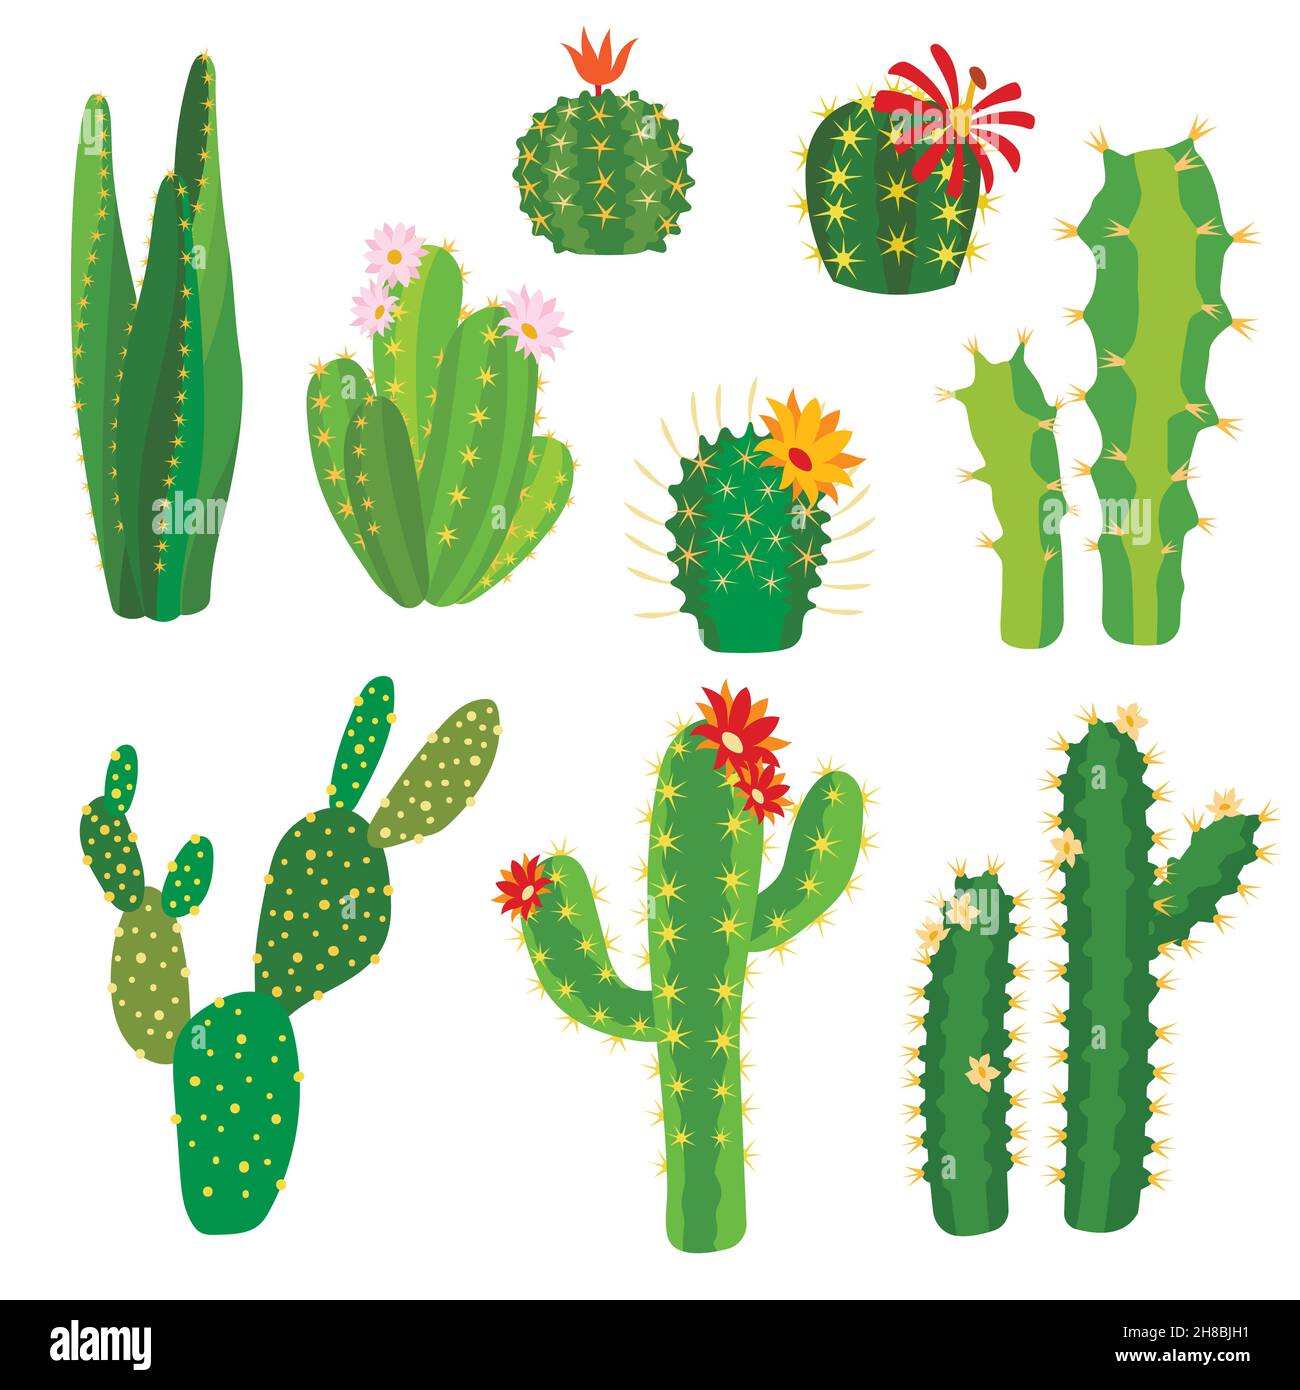 Kaktusblüte. Helle Kakteen Aloe Blätter exotische Kakteen Pflanzen Sommer Wüste tropische Flora Cartoon botanische Sammlung Stock Vektor